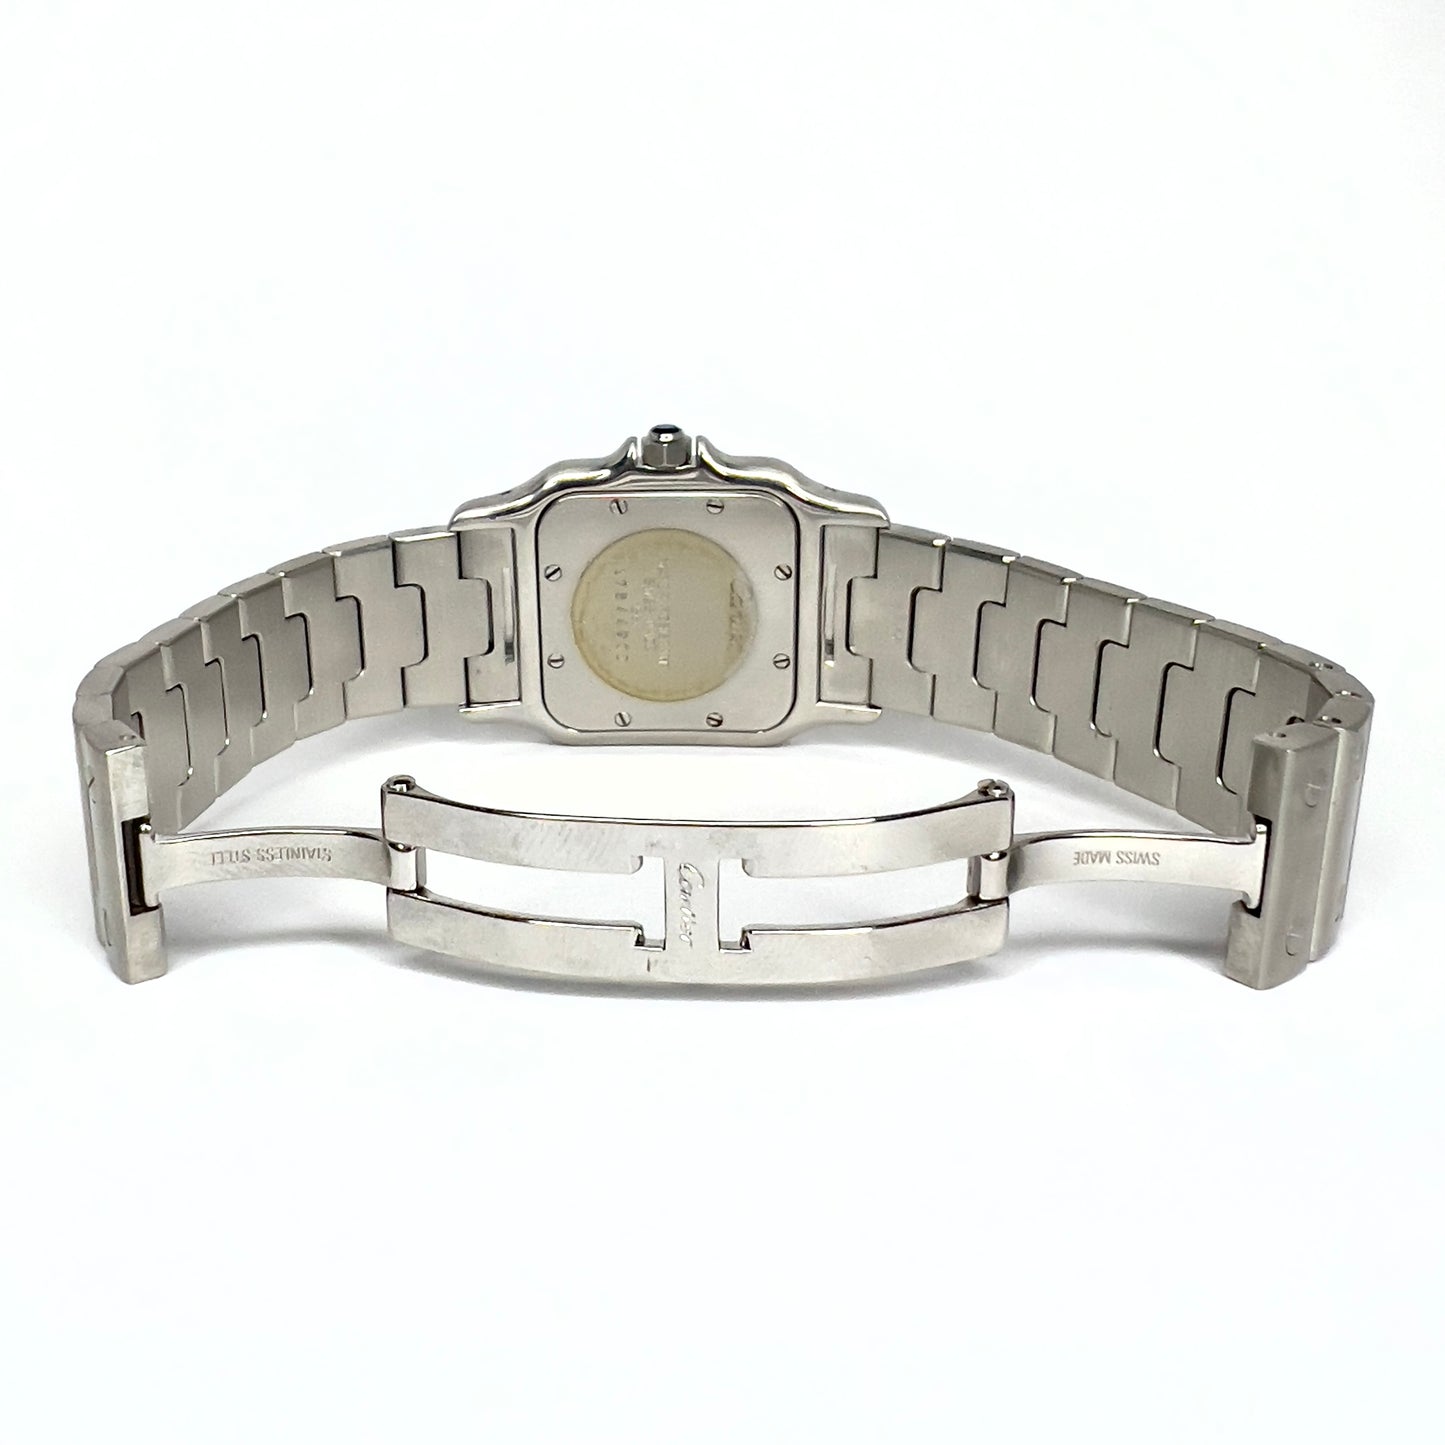 CARTIER SANTOS GALBEE 29mm Quartz Steel 1.57TCW Diamond Watch NEW Model